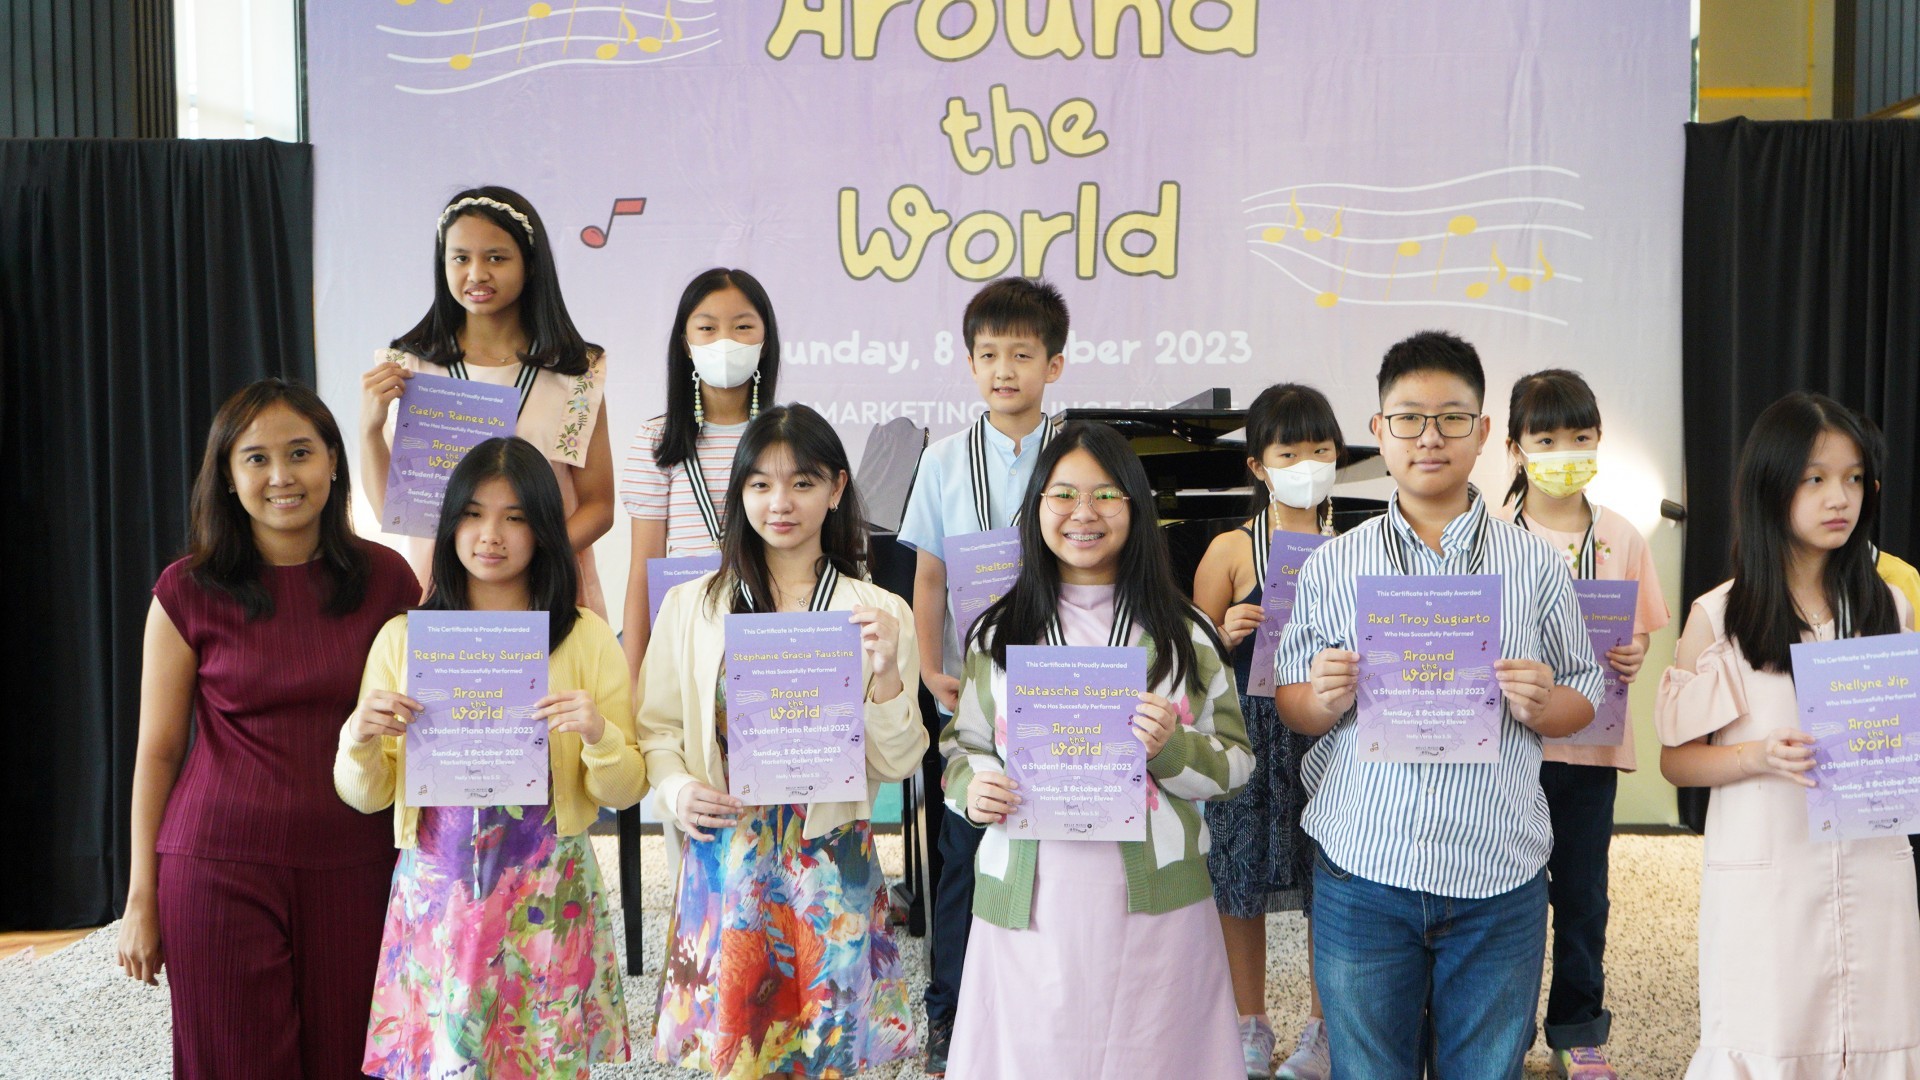 All Around The World: Students Piano Recital 2023